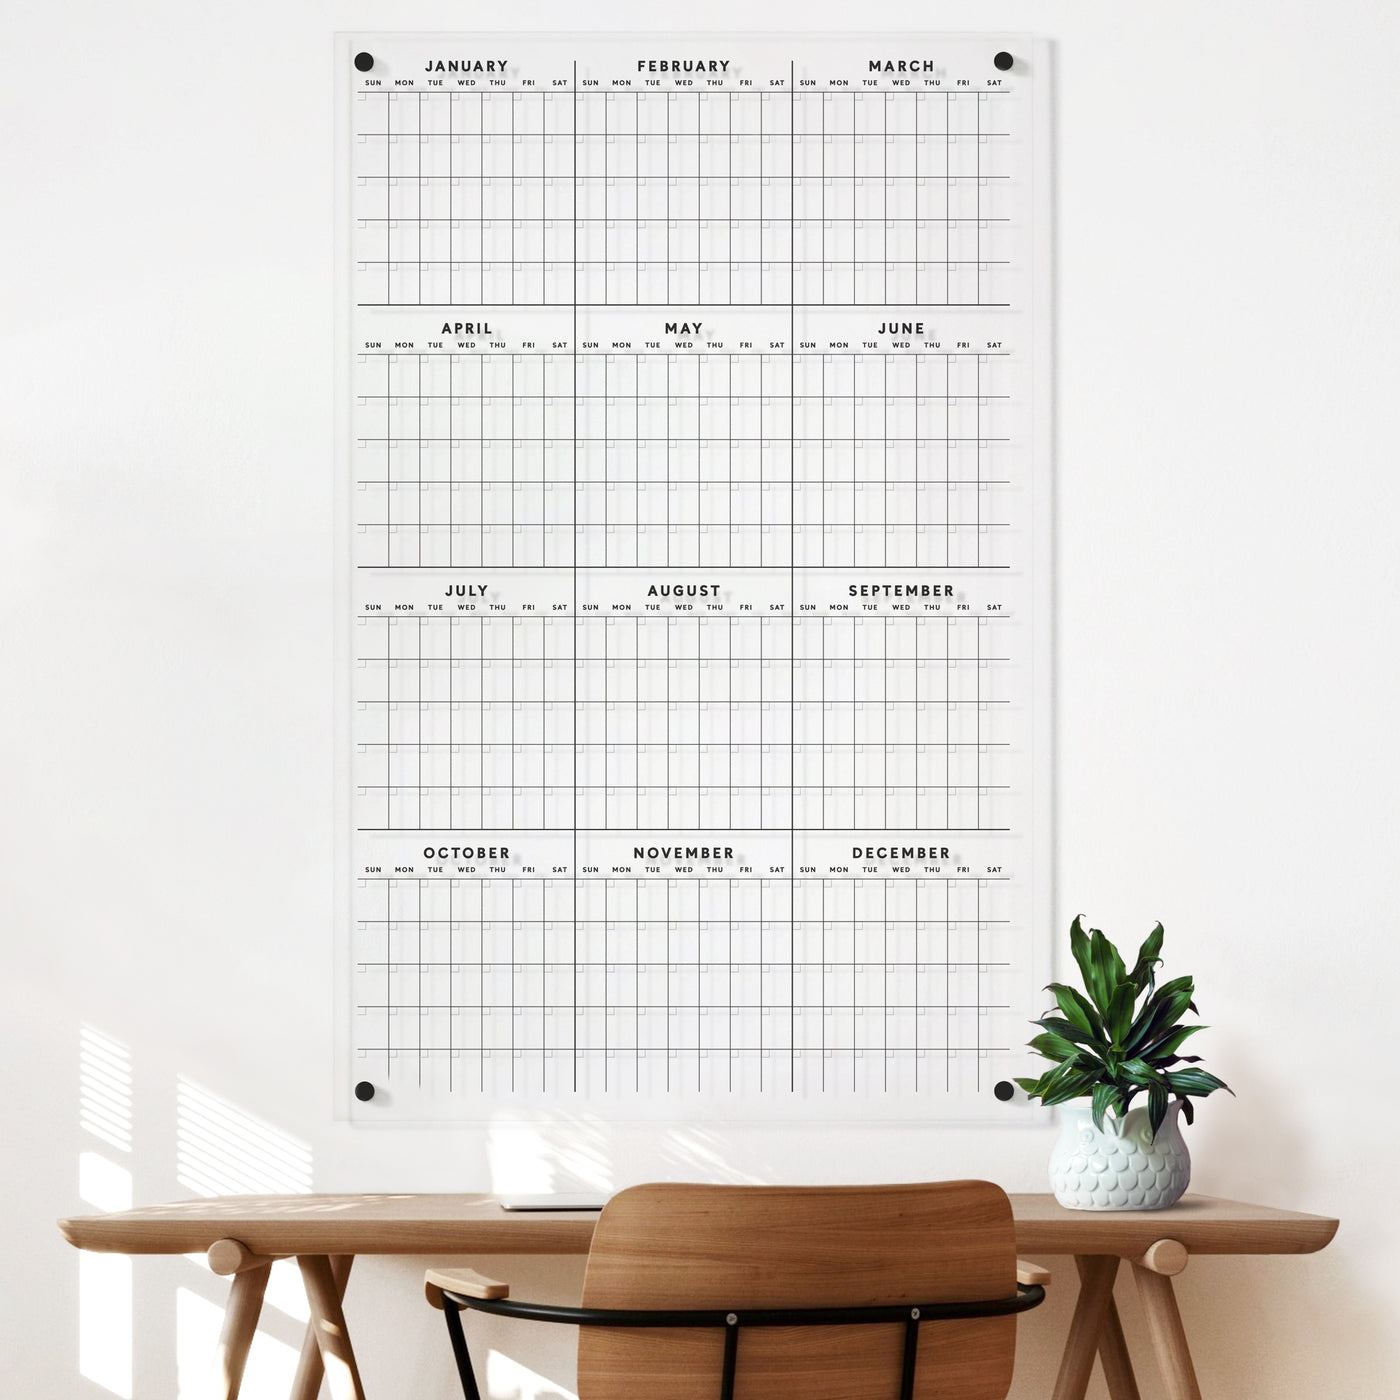 Yearly dry erase acrylic calendar | Annual at a glance board